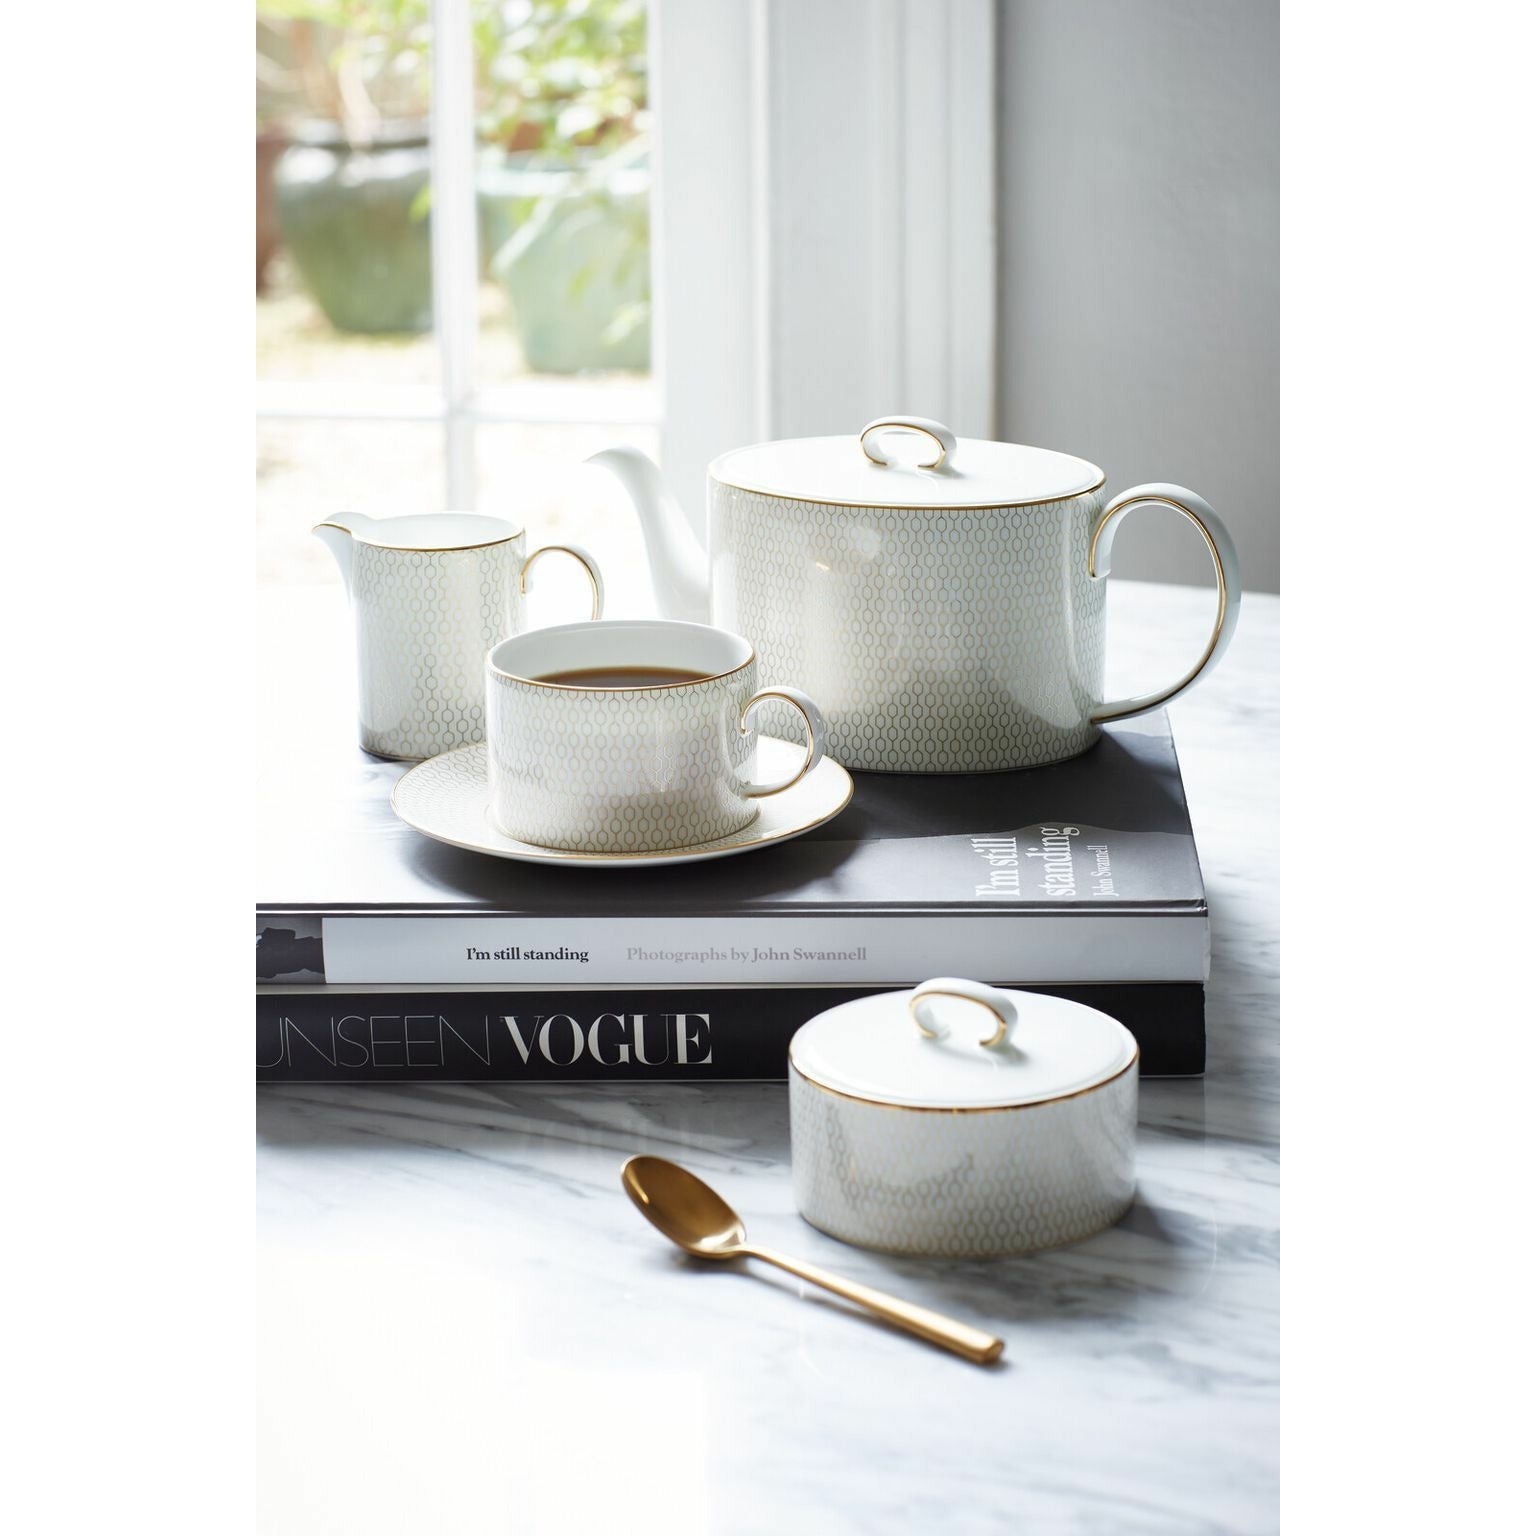 Wedgwood Arris Teapot 1 L Gift Box, White/Gold